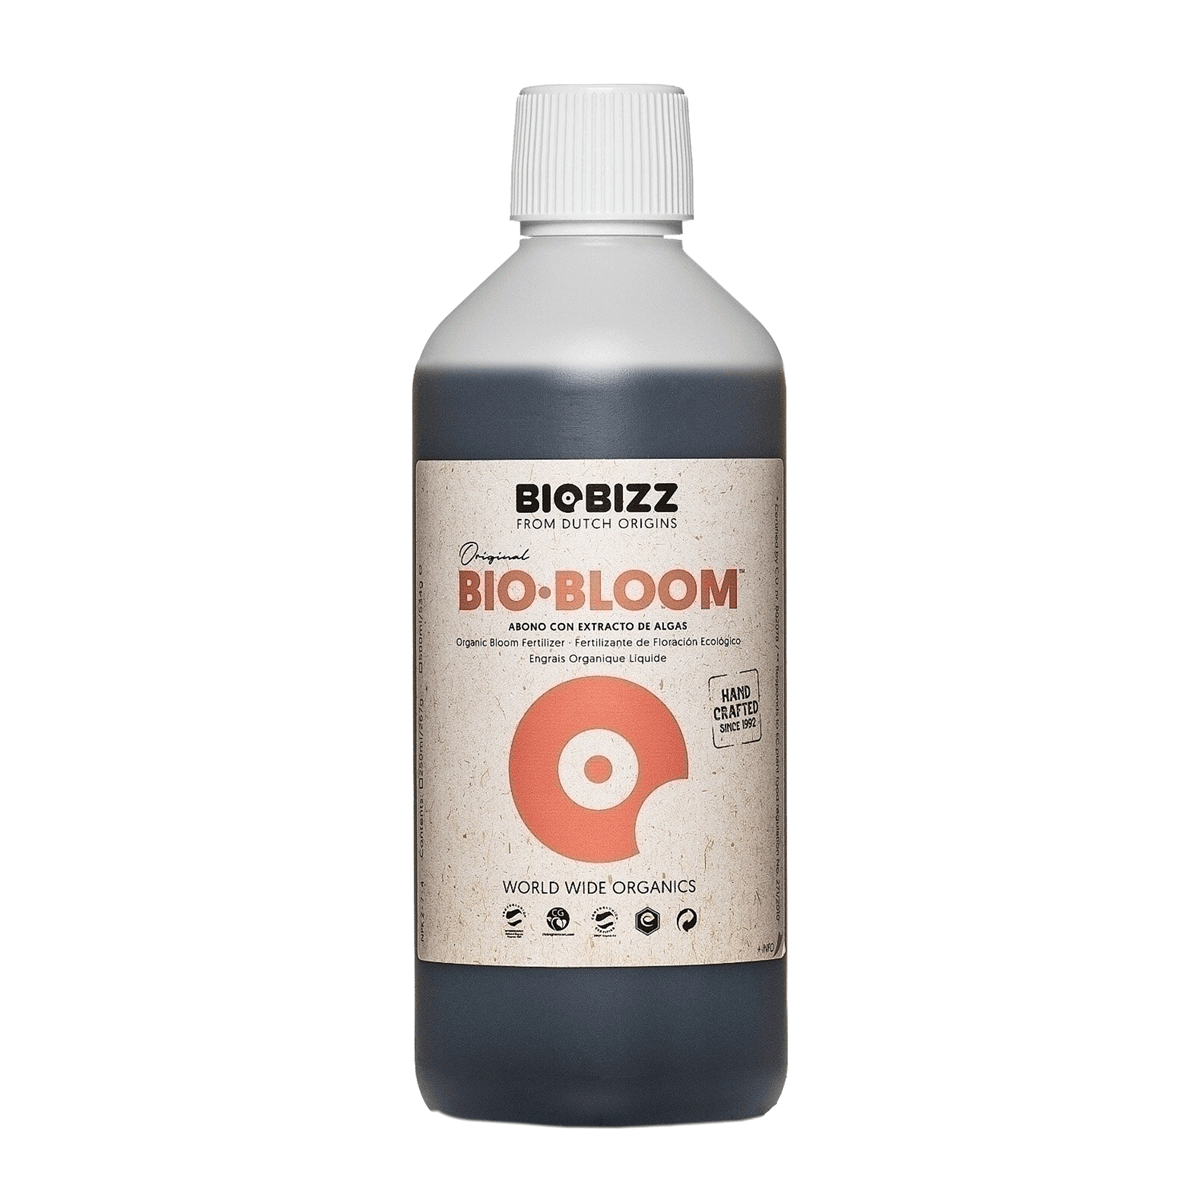 BioBizz Bio-Bloom - Organischer Blütedünger 500ml